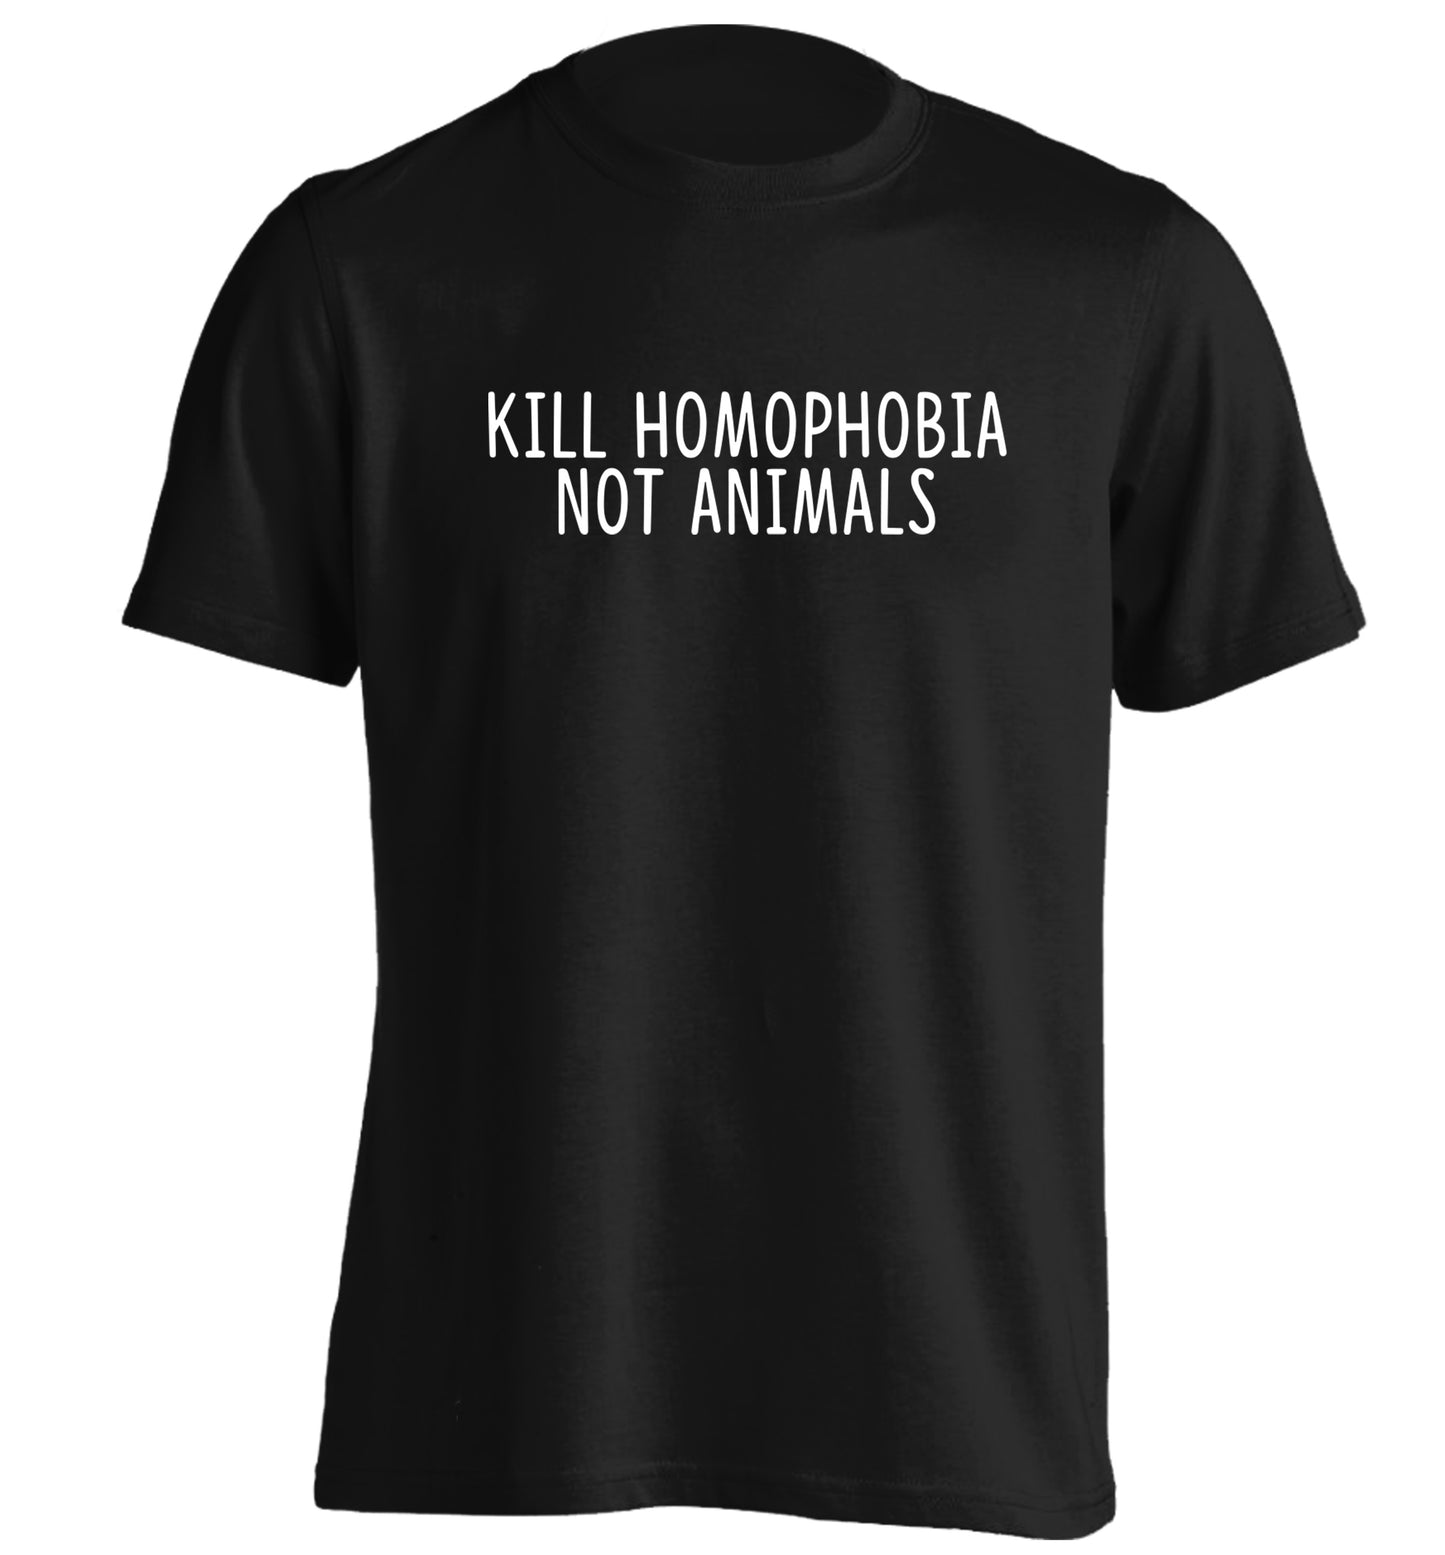 Kill Homophobia Not Animals adults unisex black Tshirt 2XL